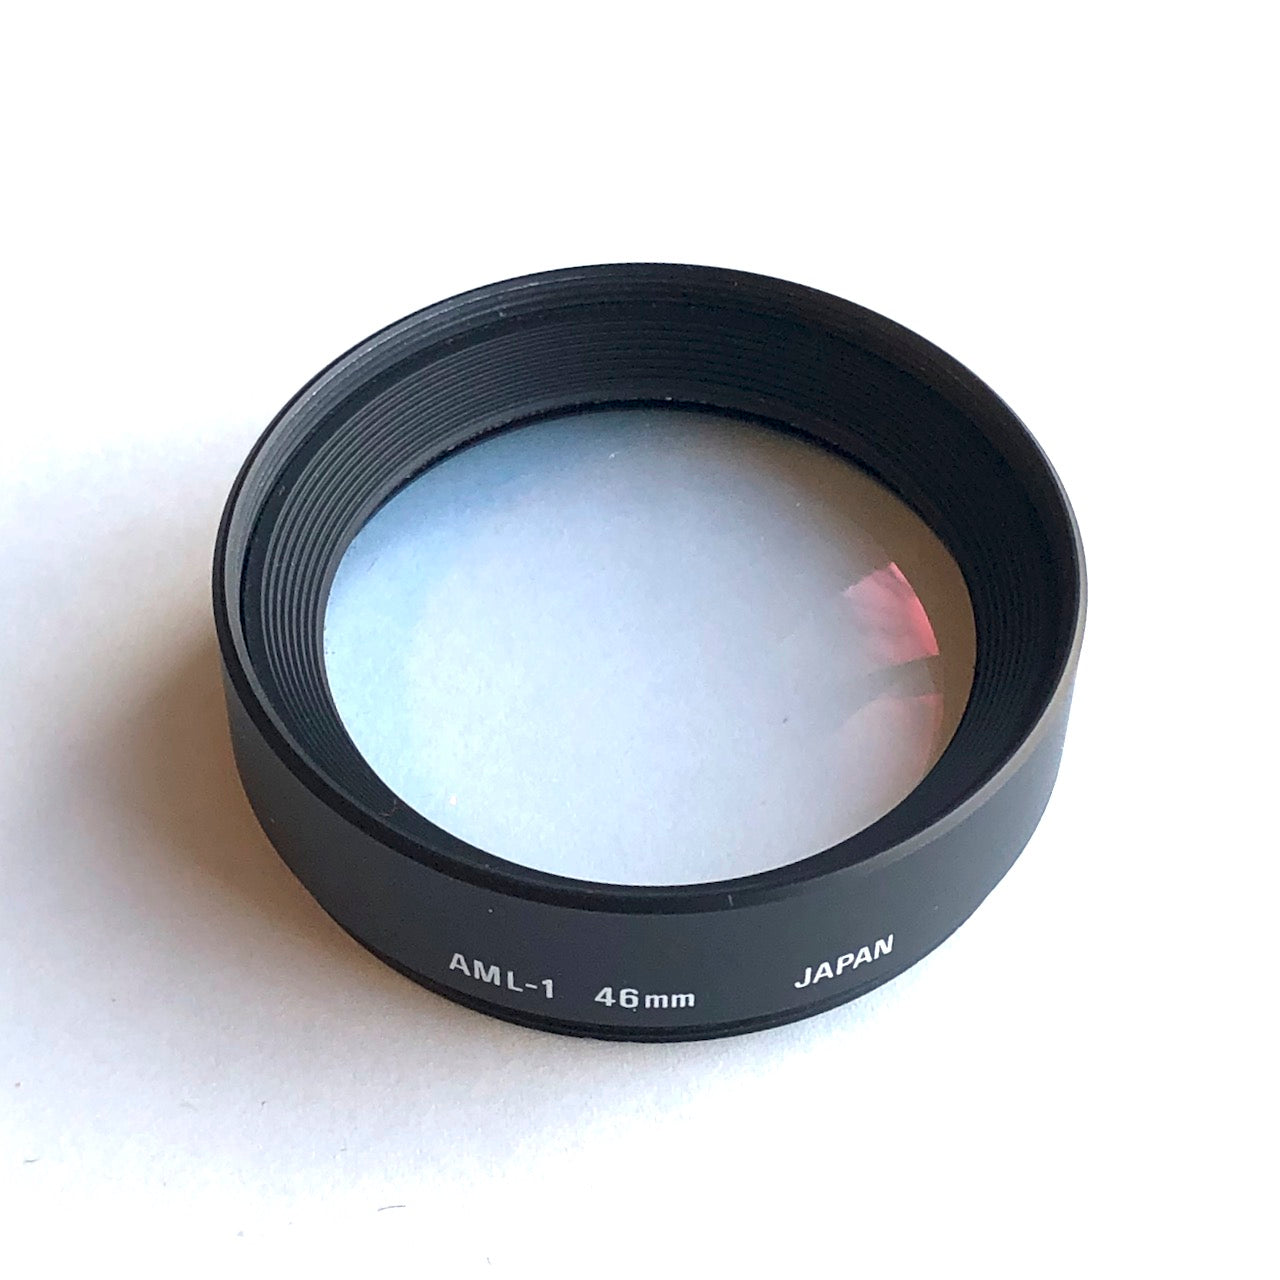 Sigma AML-1 46mm Close-up Lens